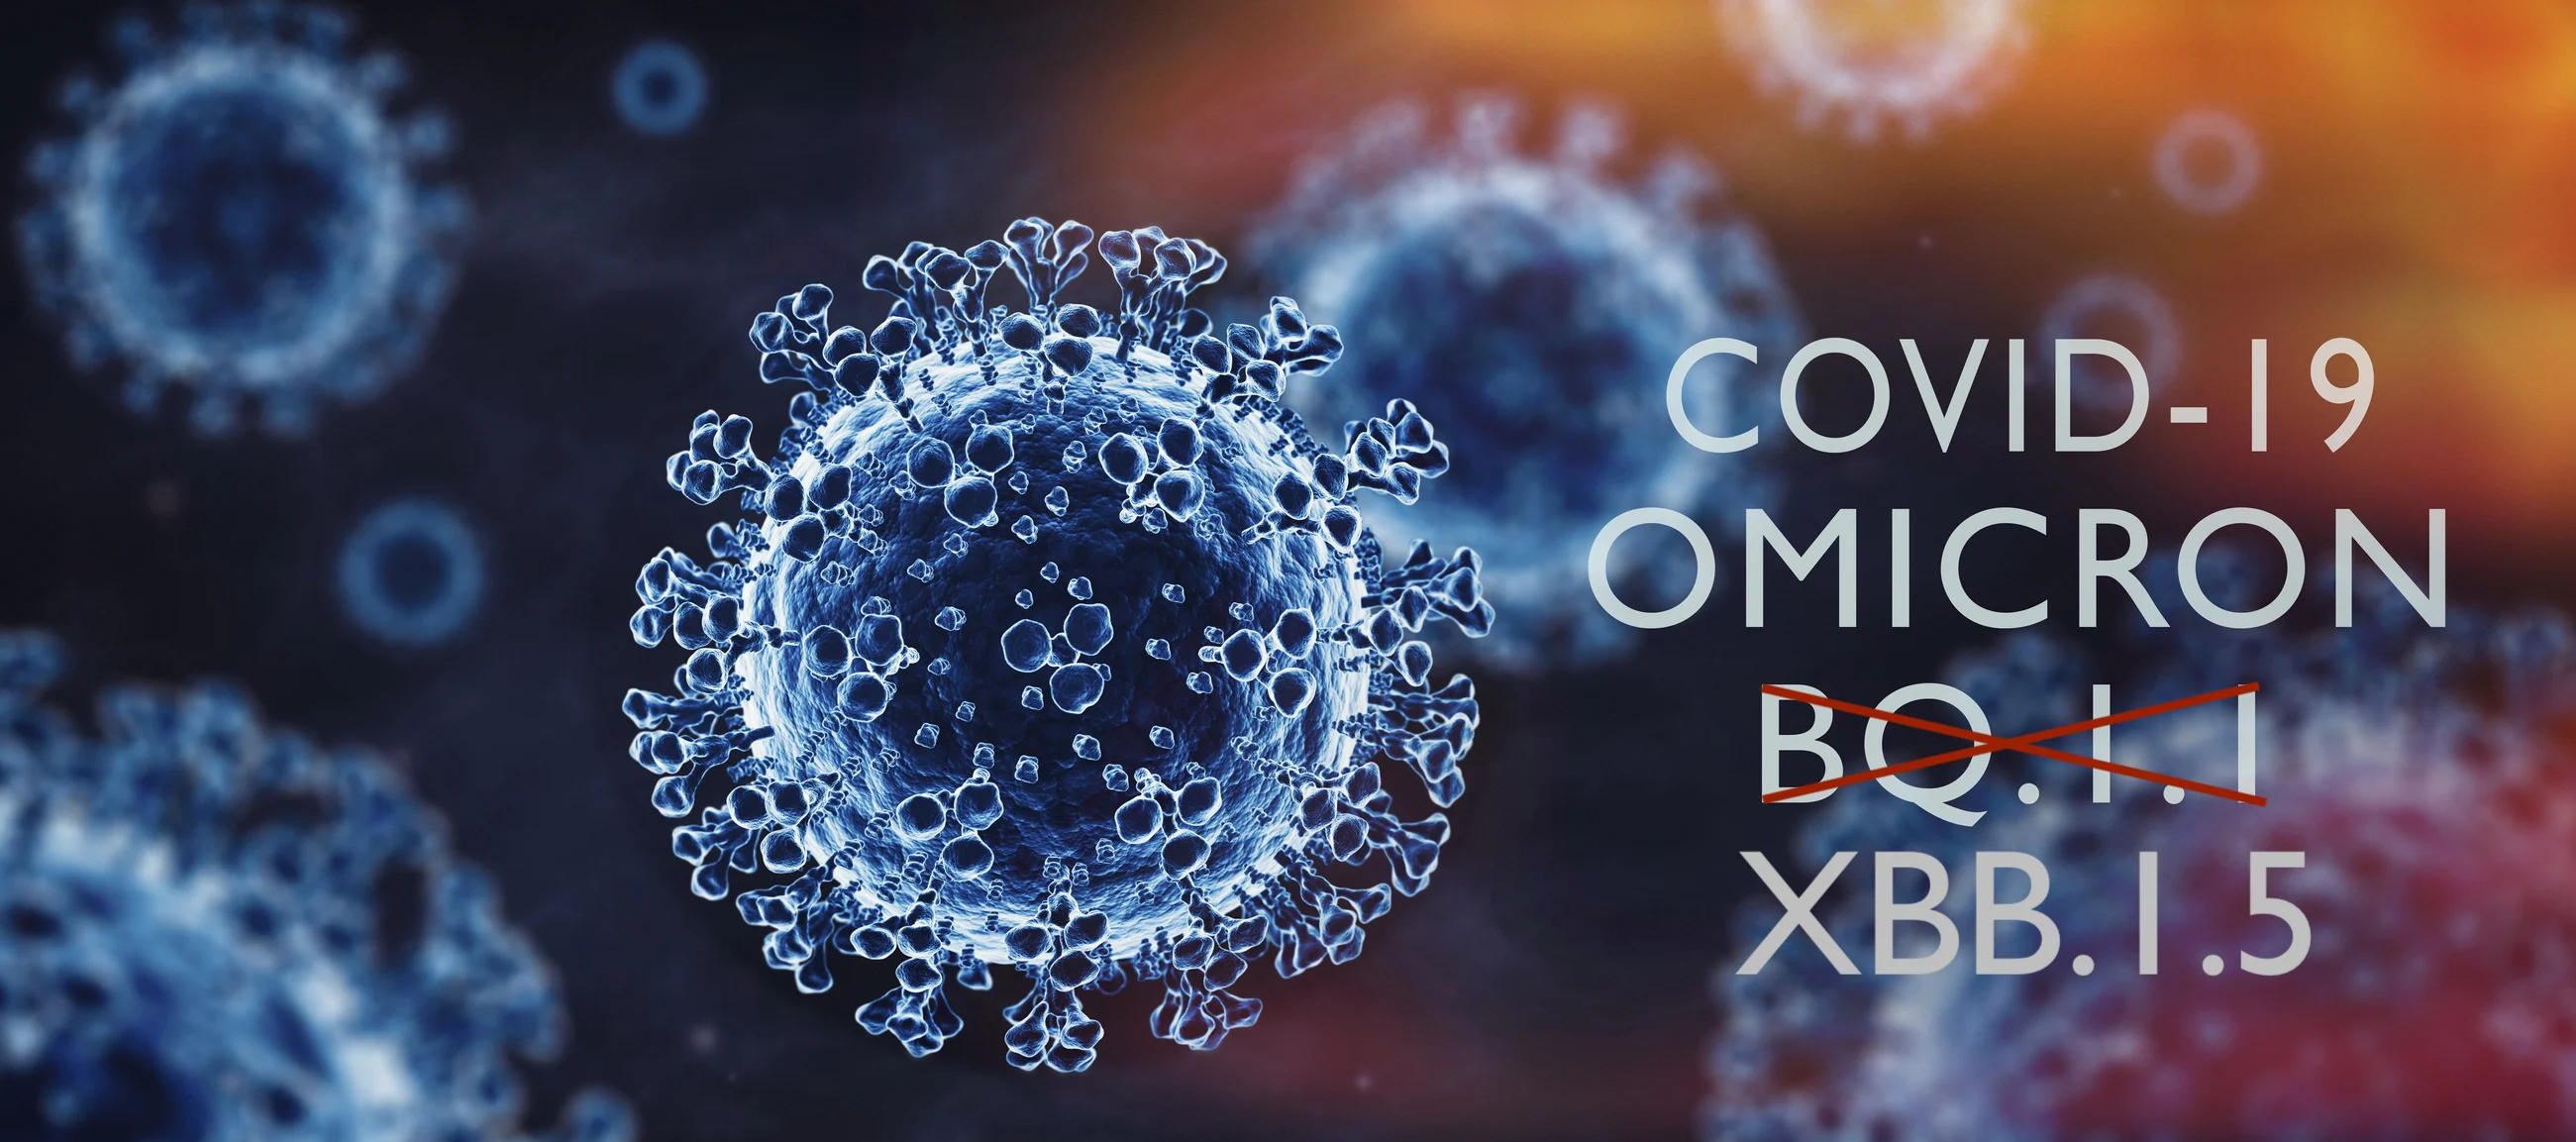 Image of COVID-19 Omicron XBB.1.5 virus